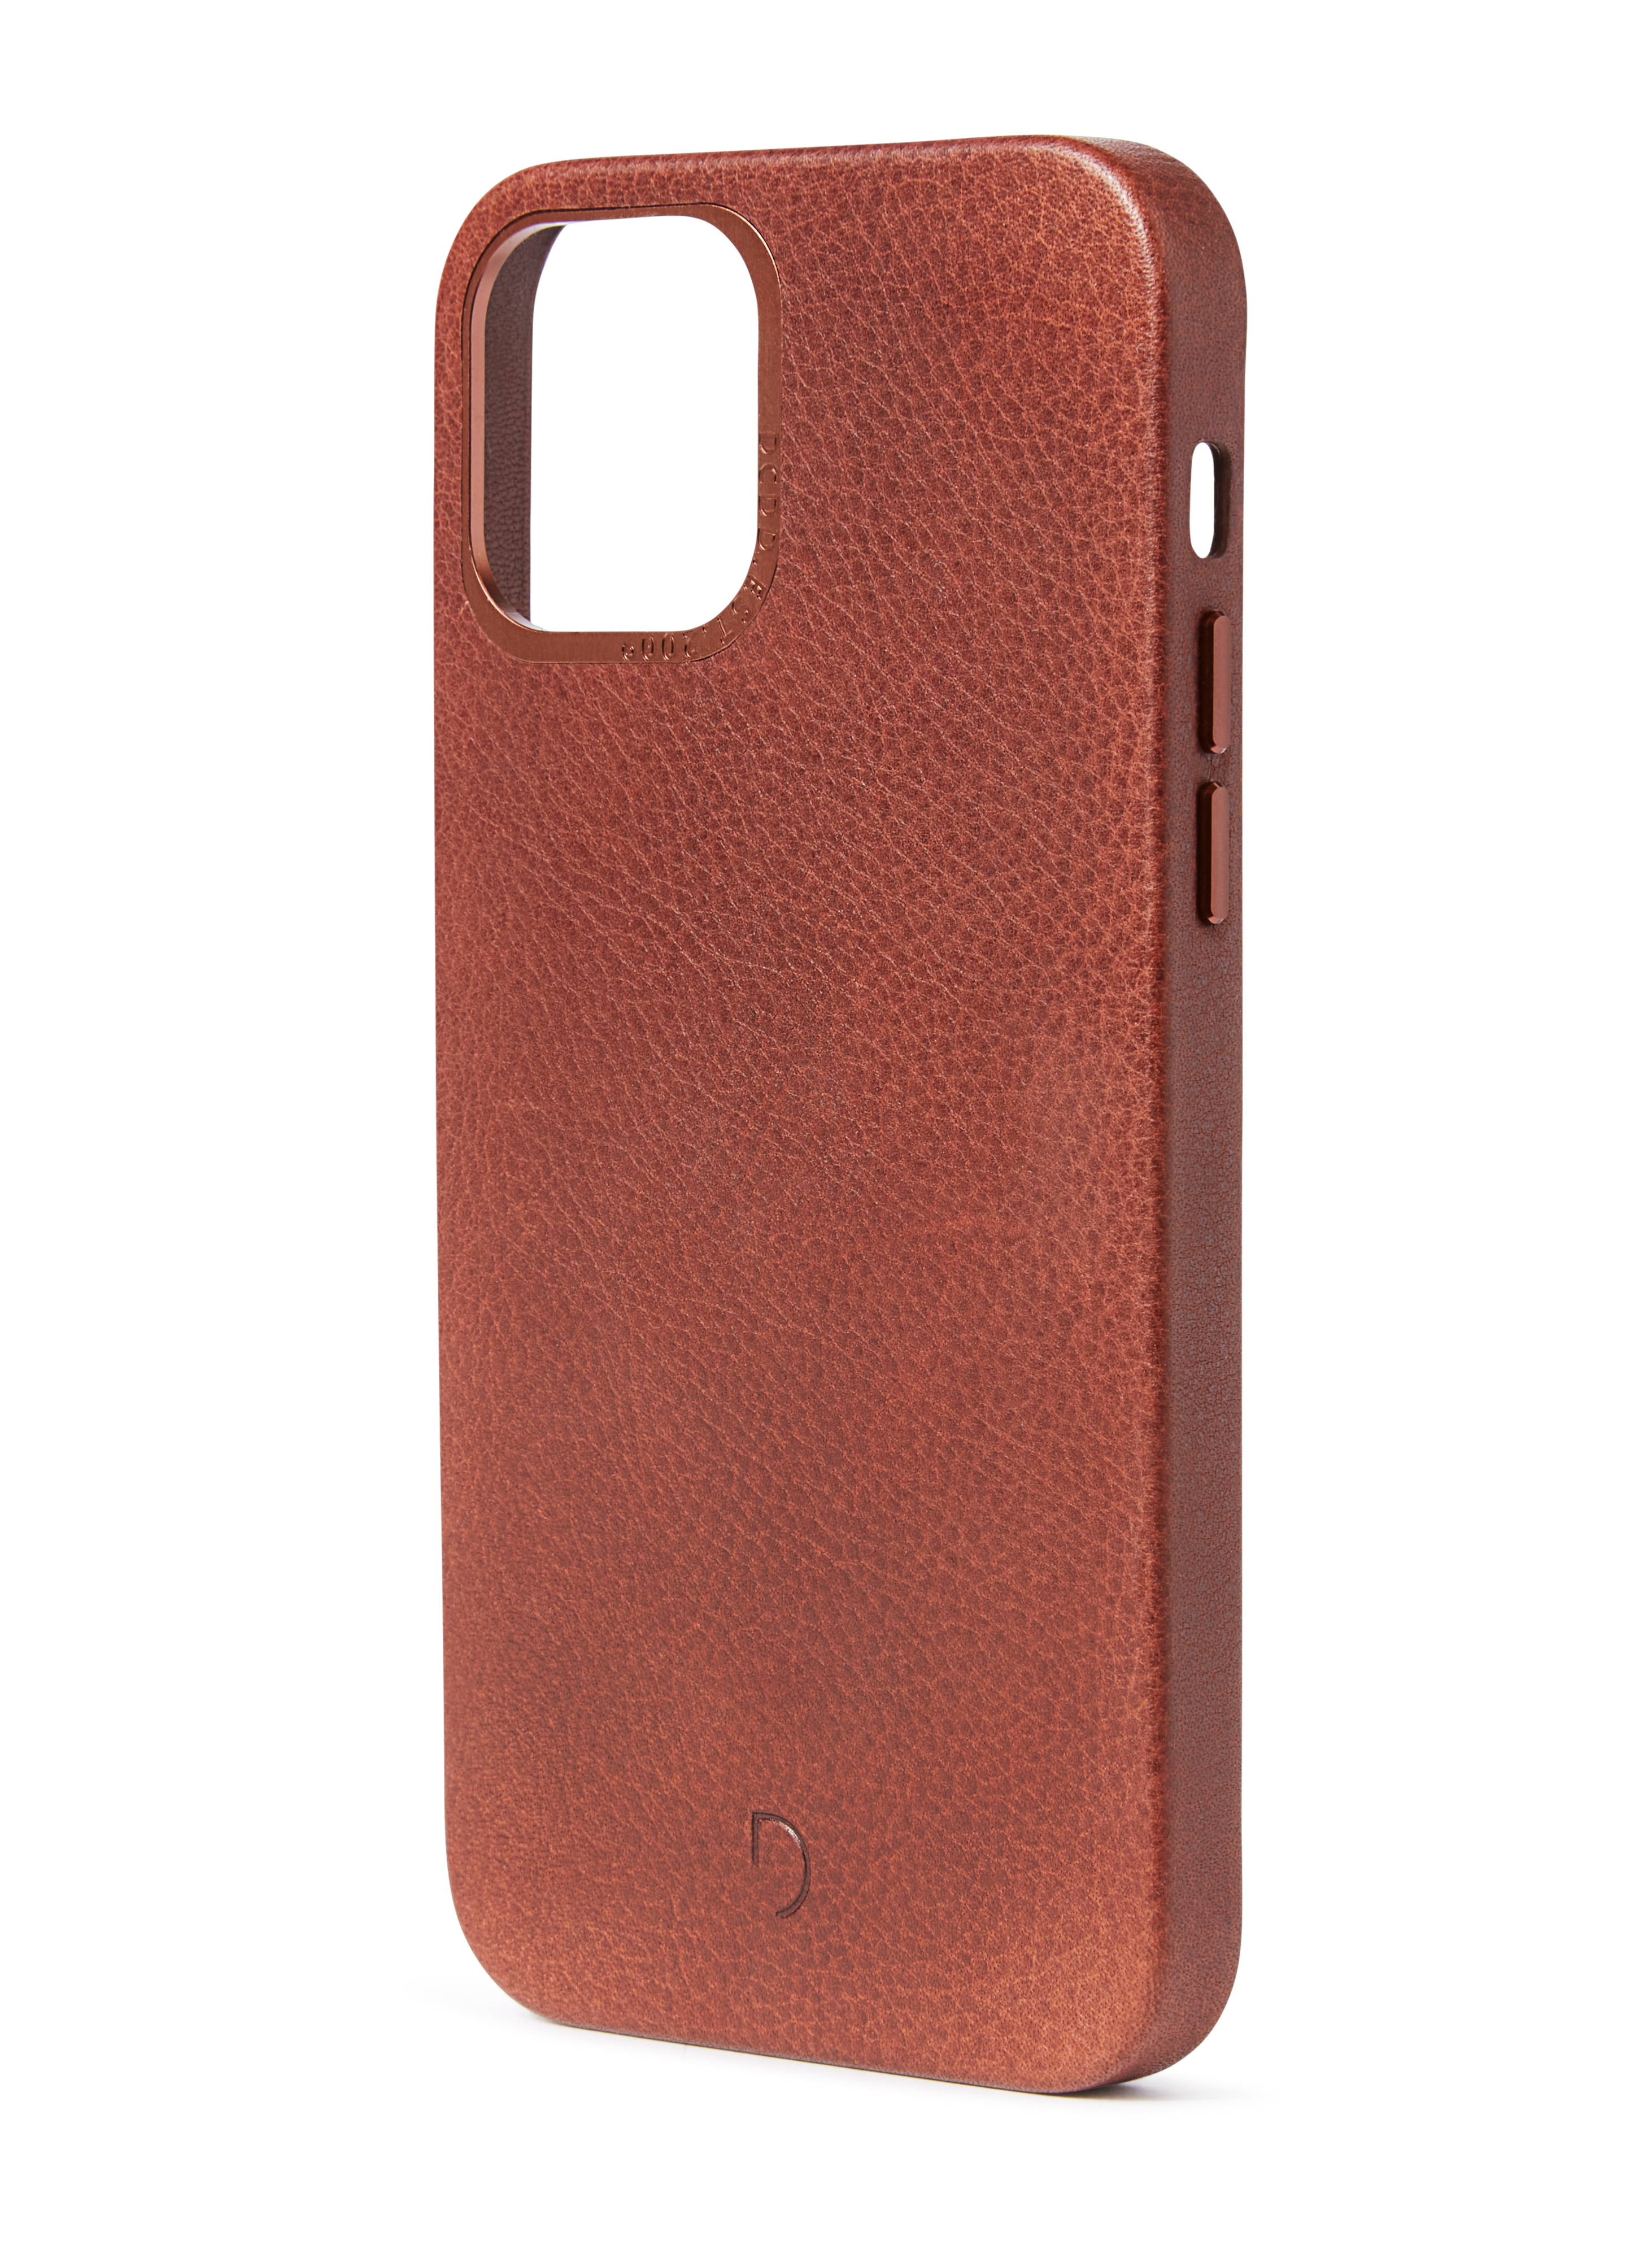 iPhone 12 Mini, leather case magsafe, cinnamon brown